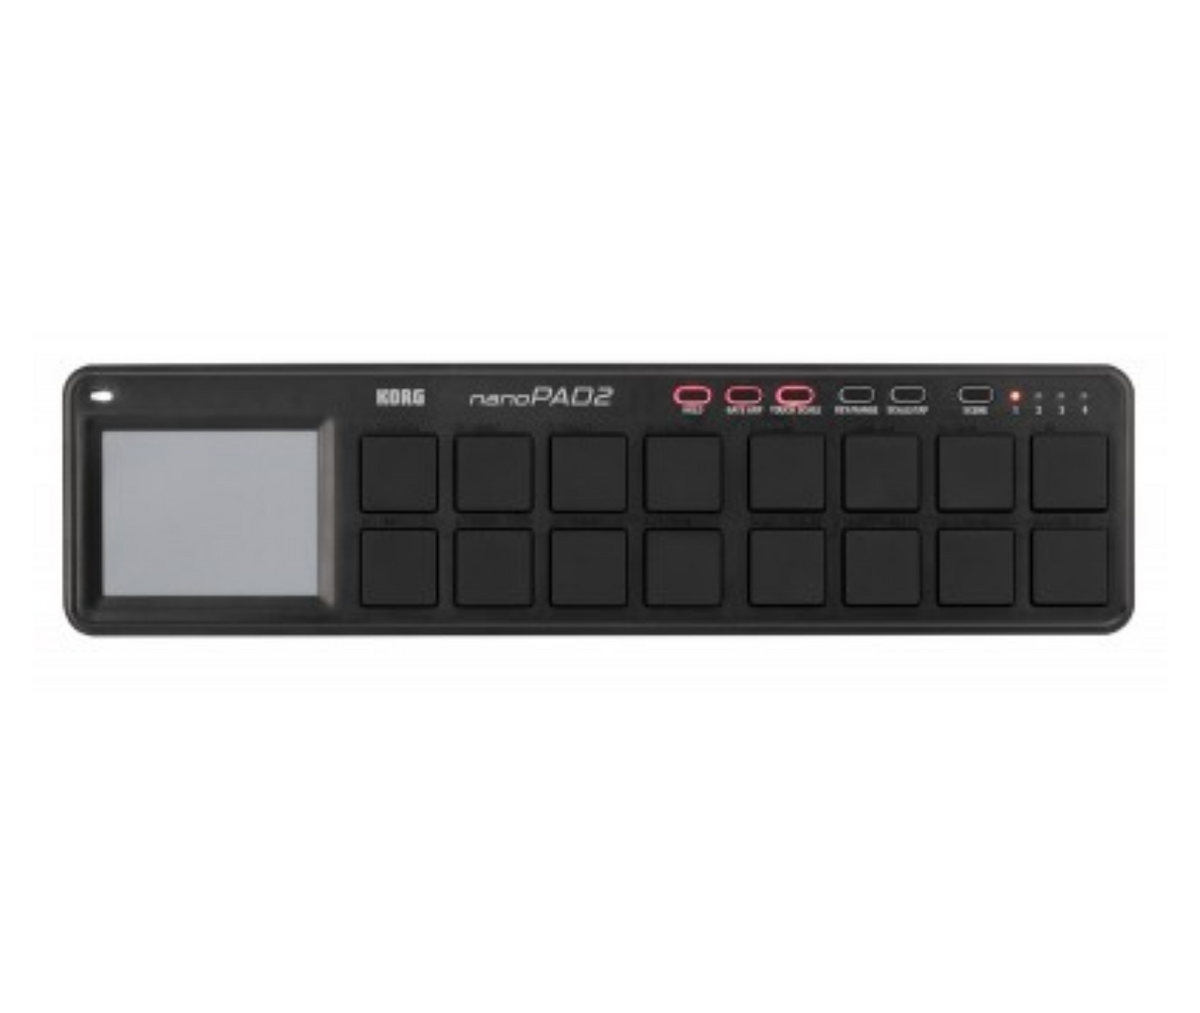 KORG nanoPAD2 Slim-line Best USB MIDI Controller Keyboard Black with 16 Responsive, and Velocity-sensitive Trigger Pads